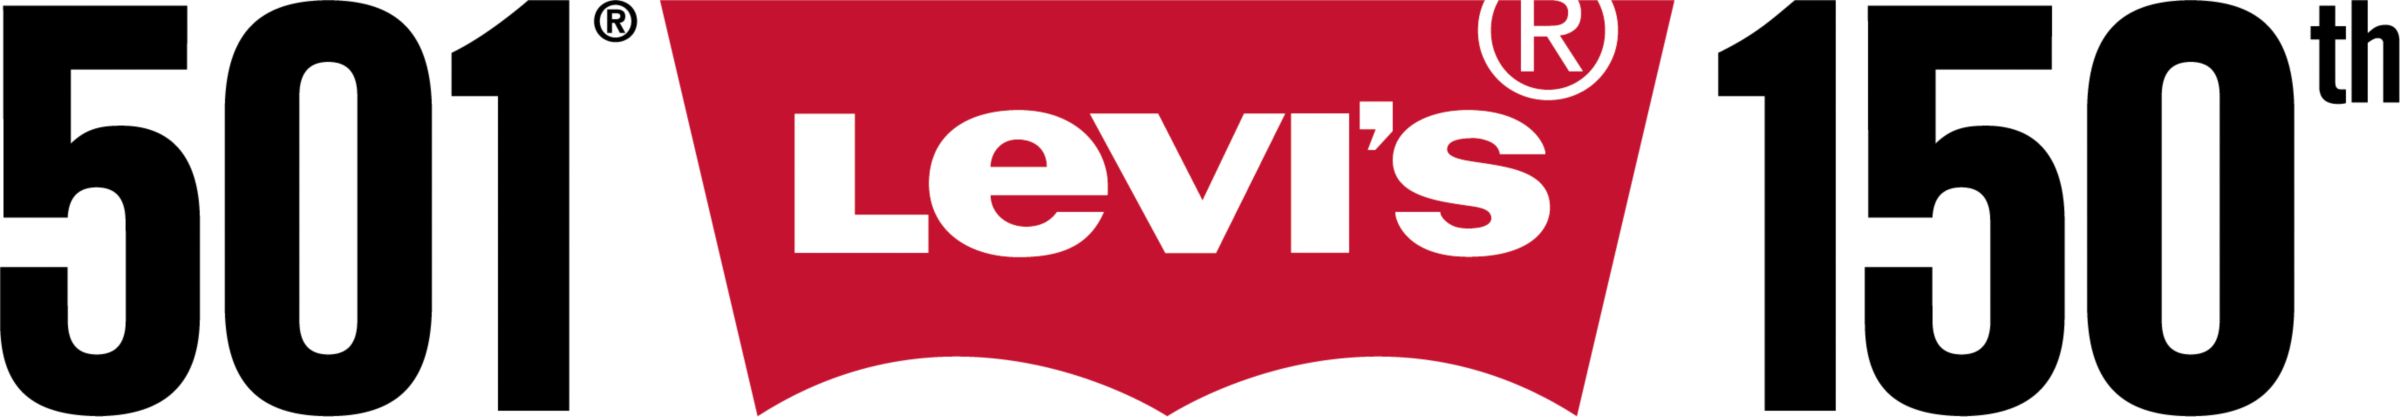 levis logo 150 years